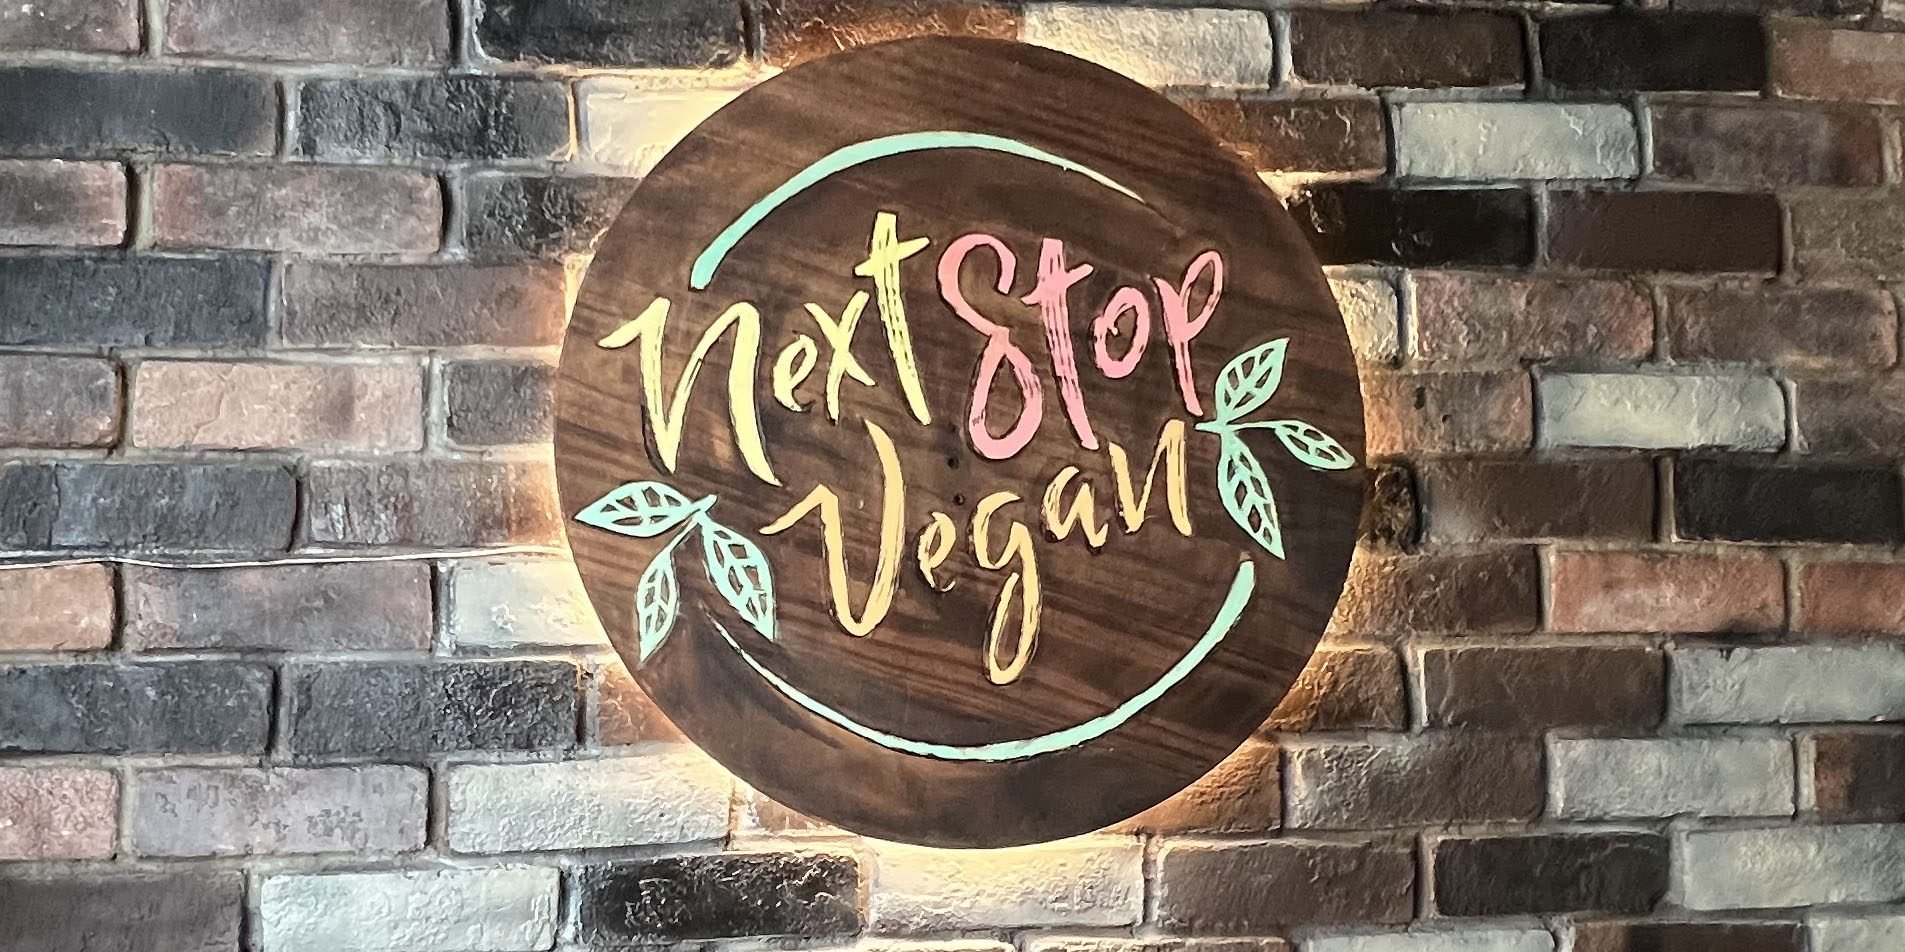 Next-Stop-Vegan.jpg